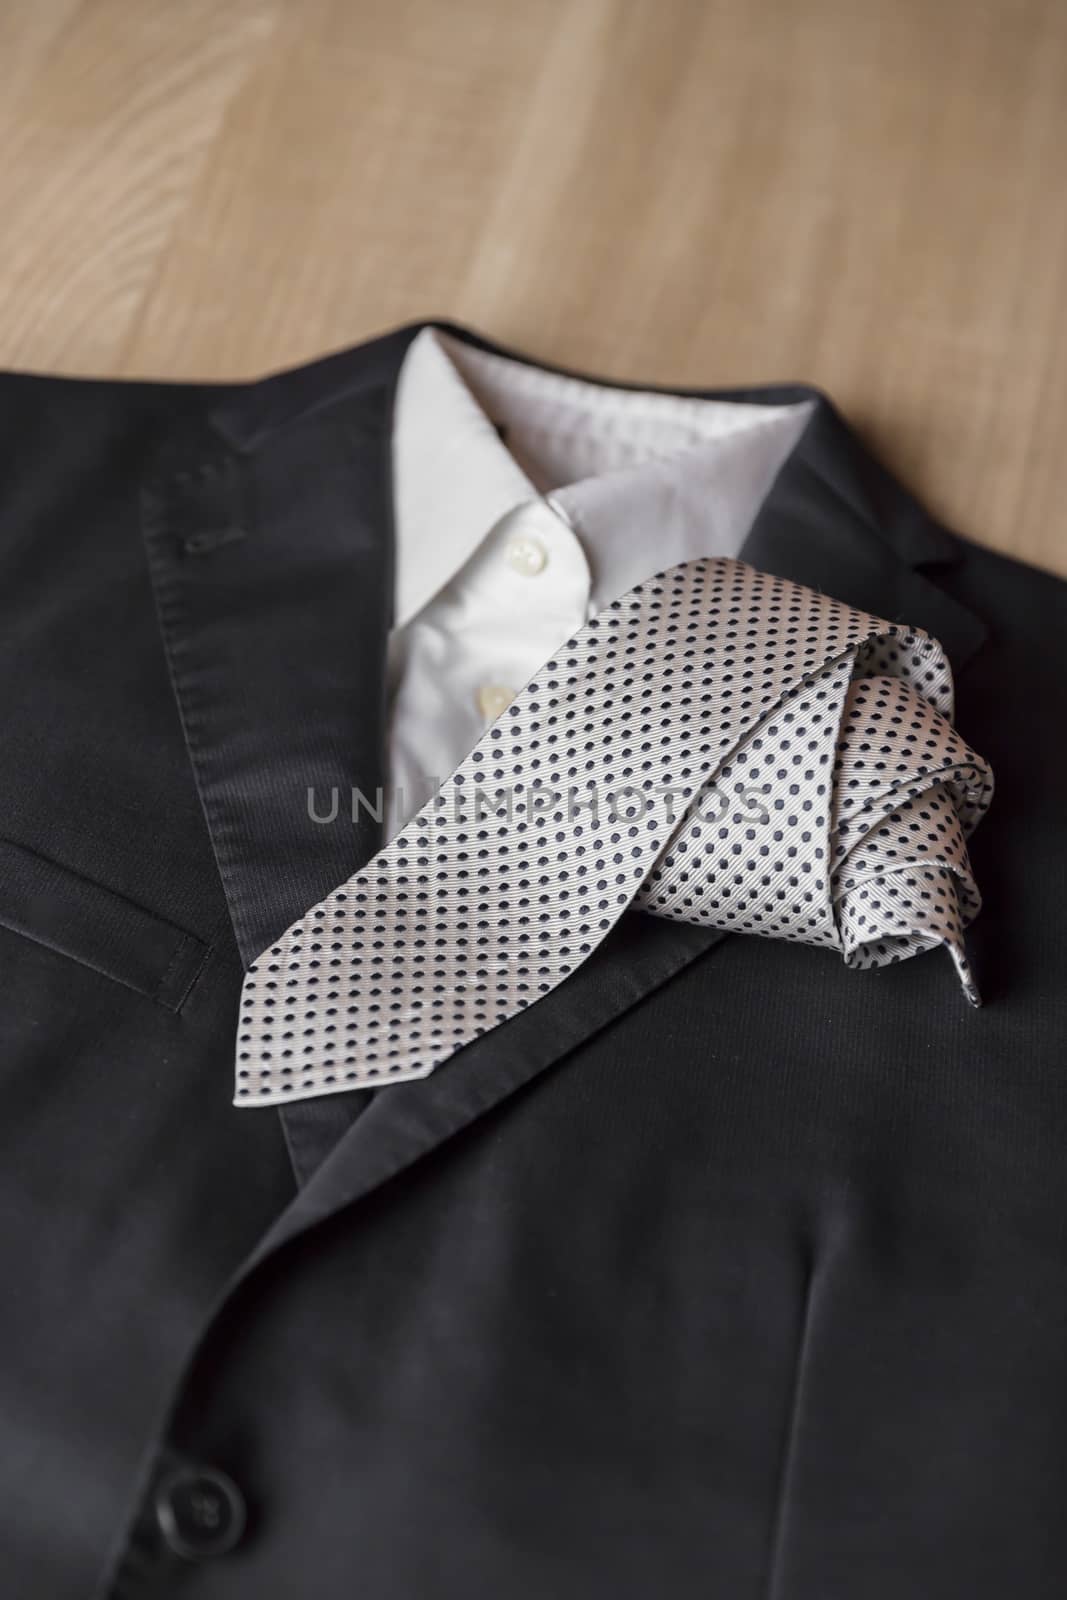 Jacket and tie detail by germanopoli